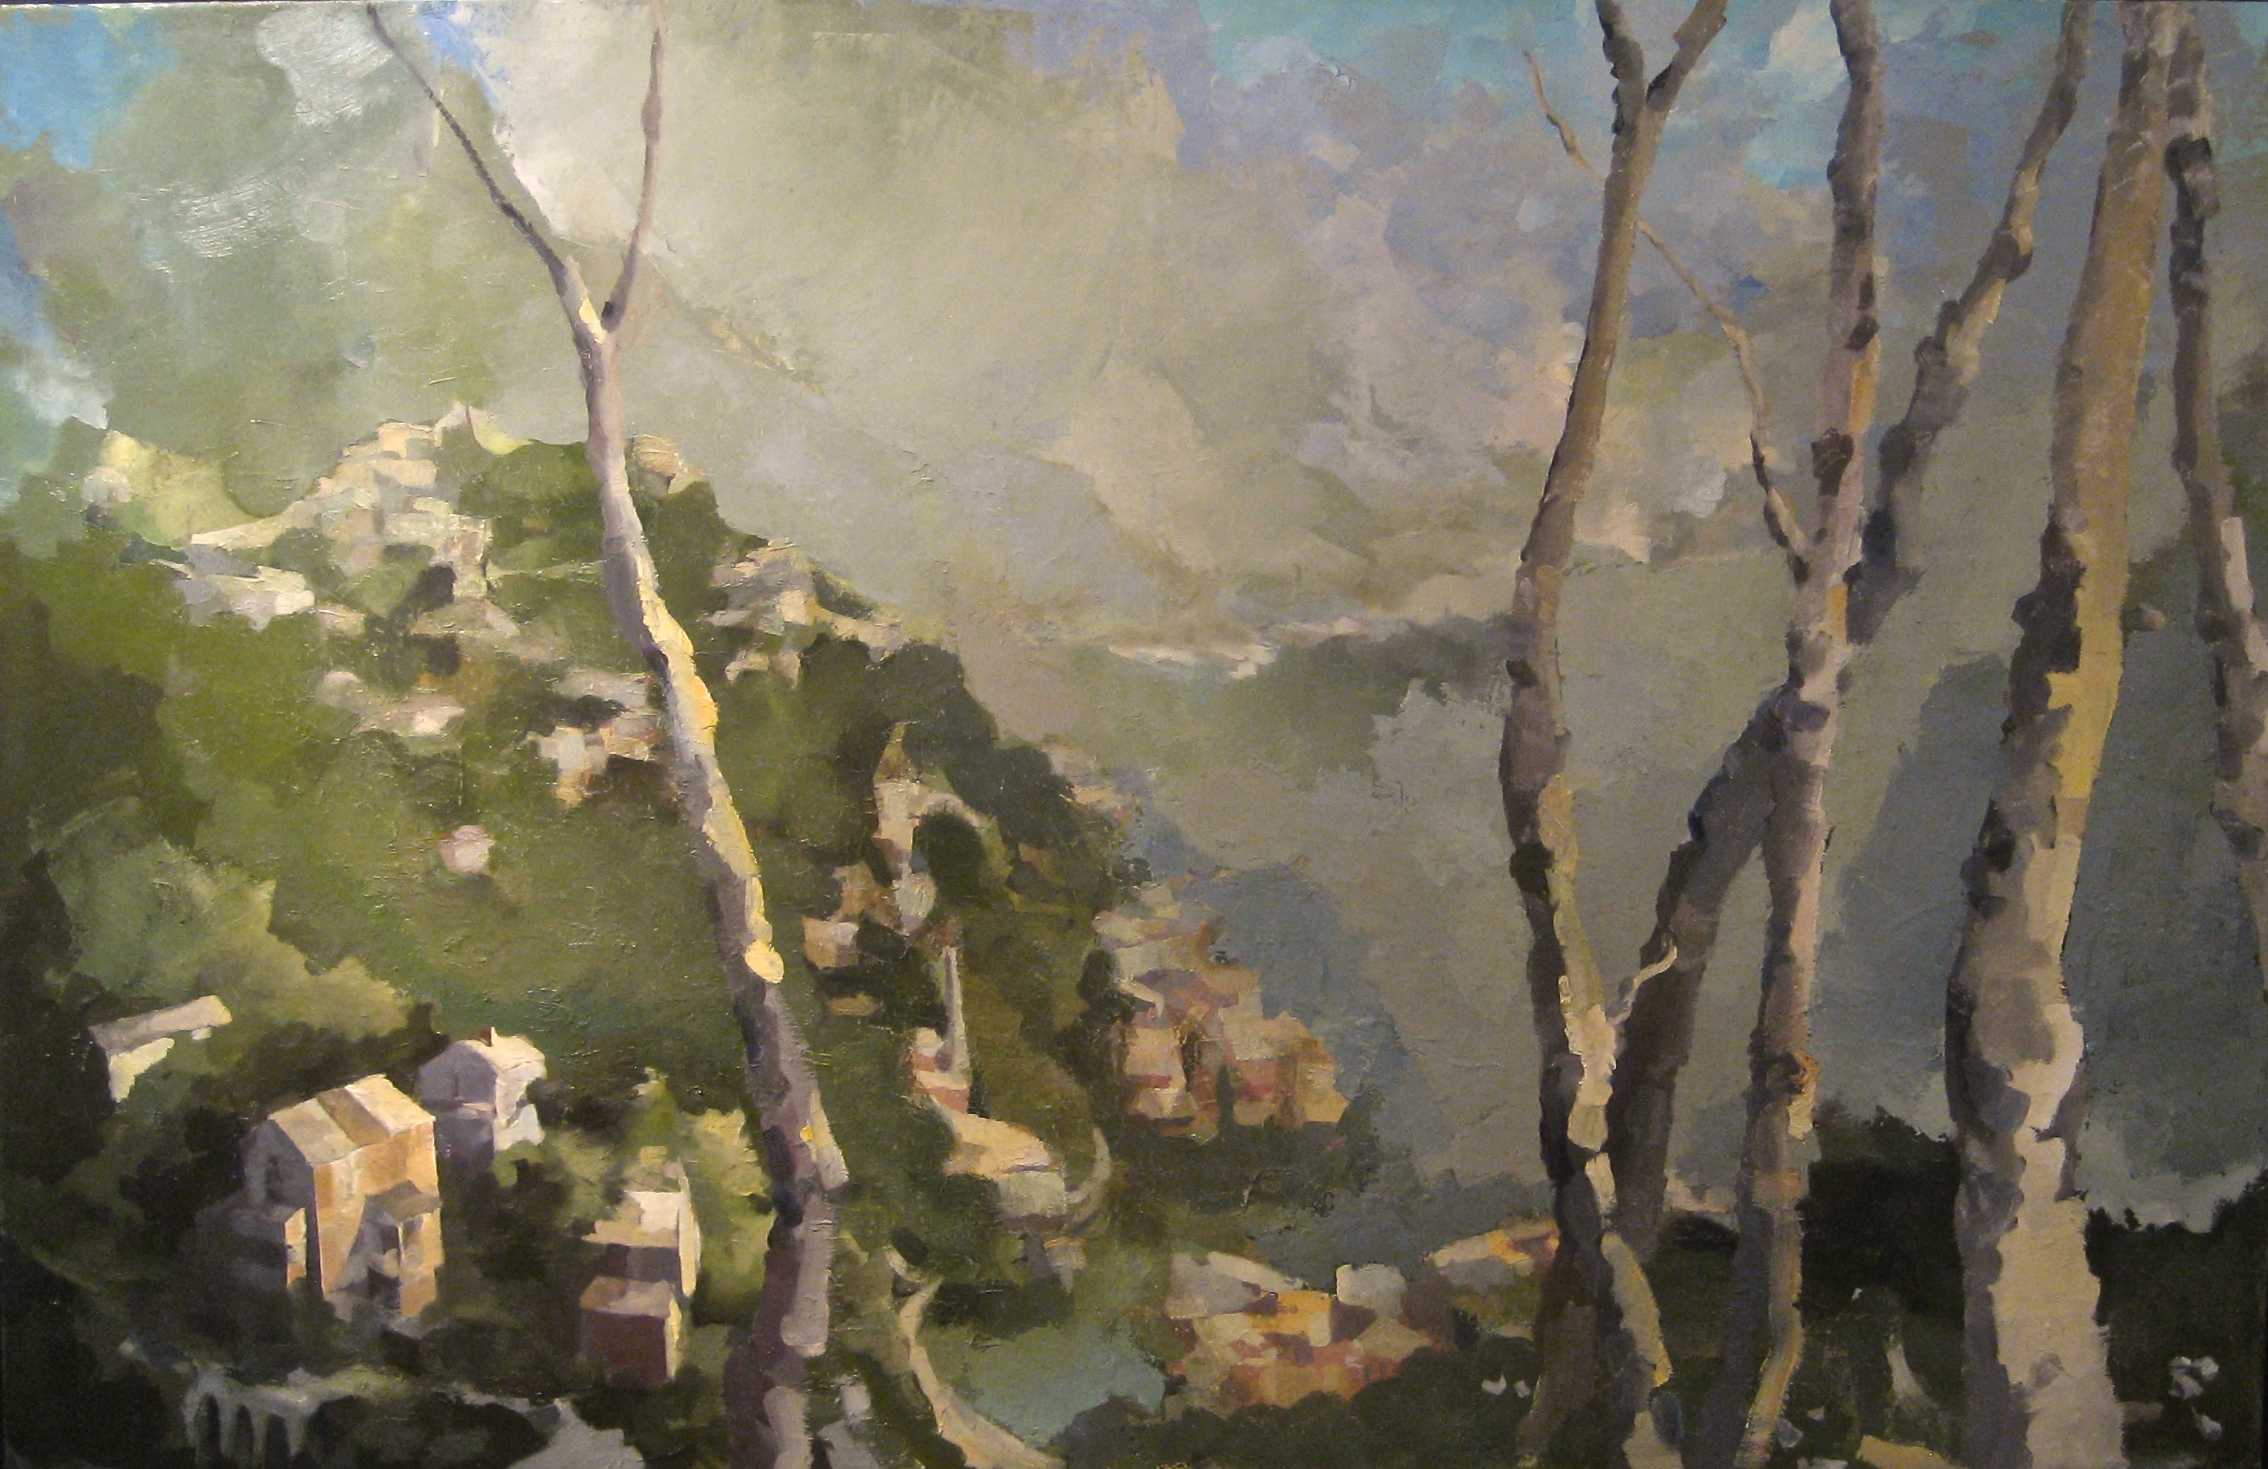 Acony Bells, Oil on Canvas, 54" x 84"